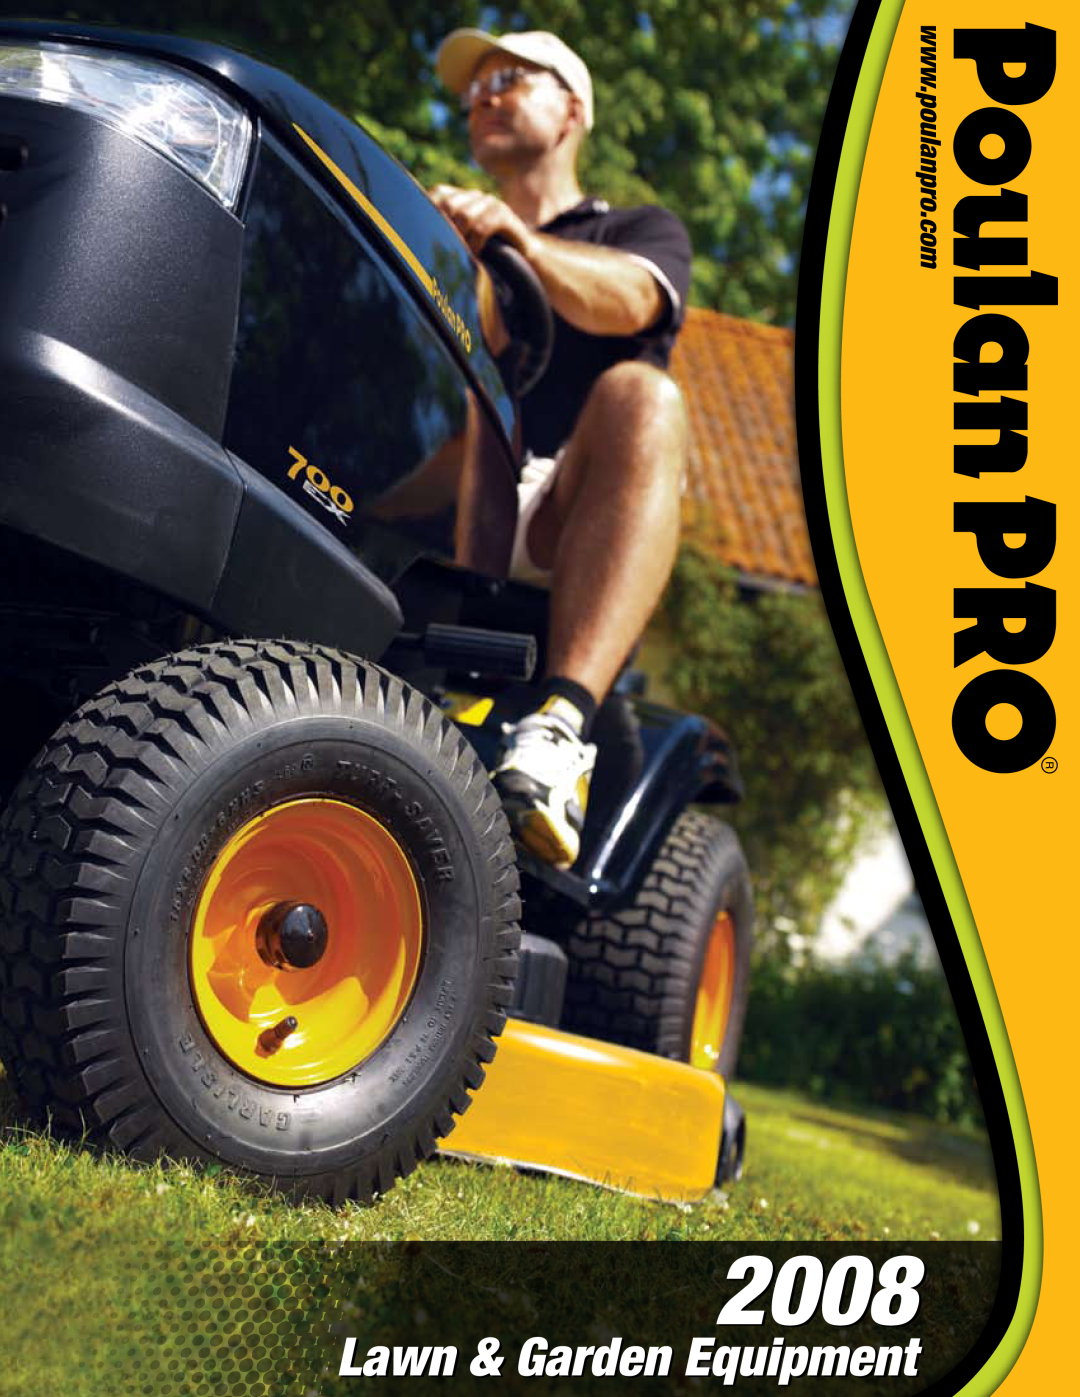 Poulan Lawn & Garden Tractor manual 2008, Lawn & Garden Equipment 